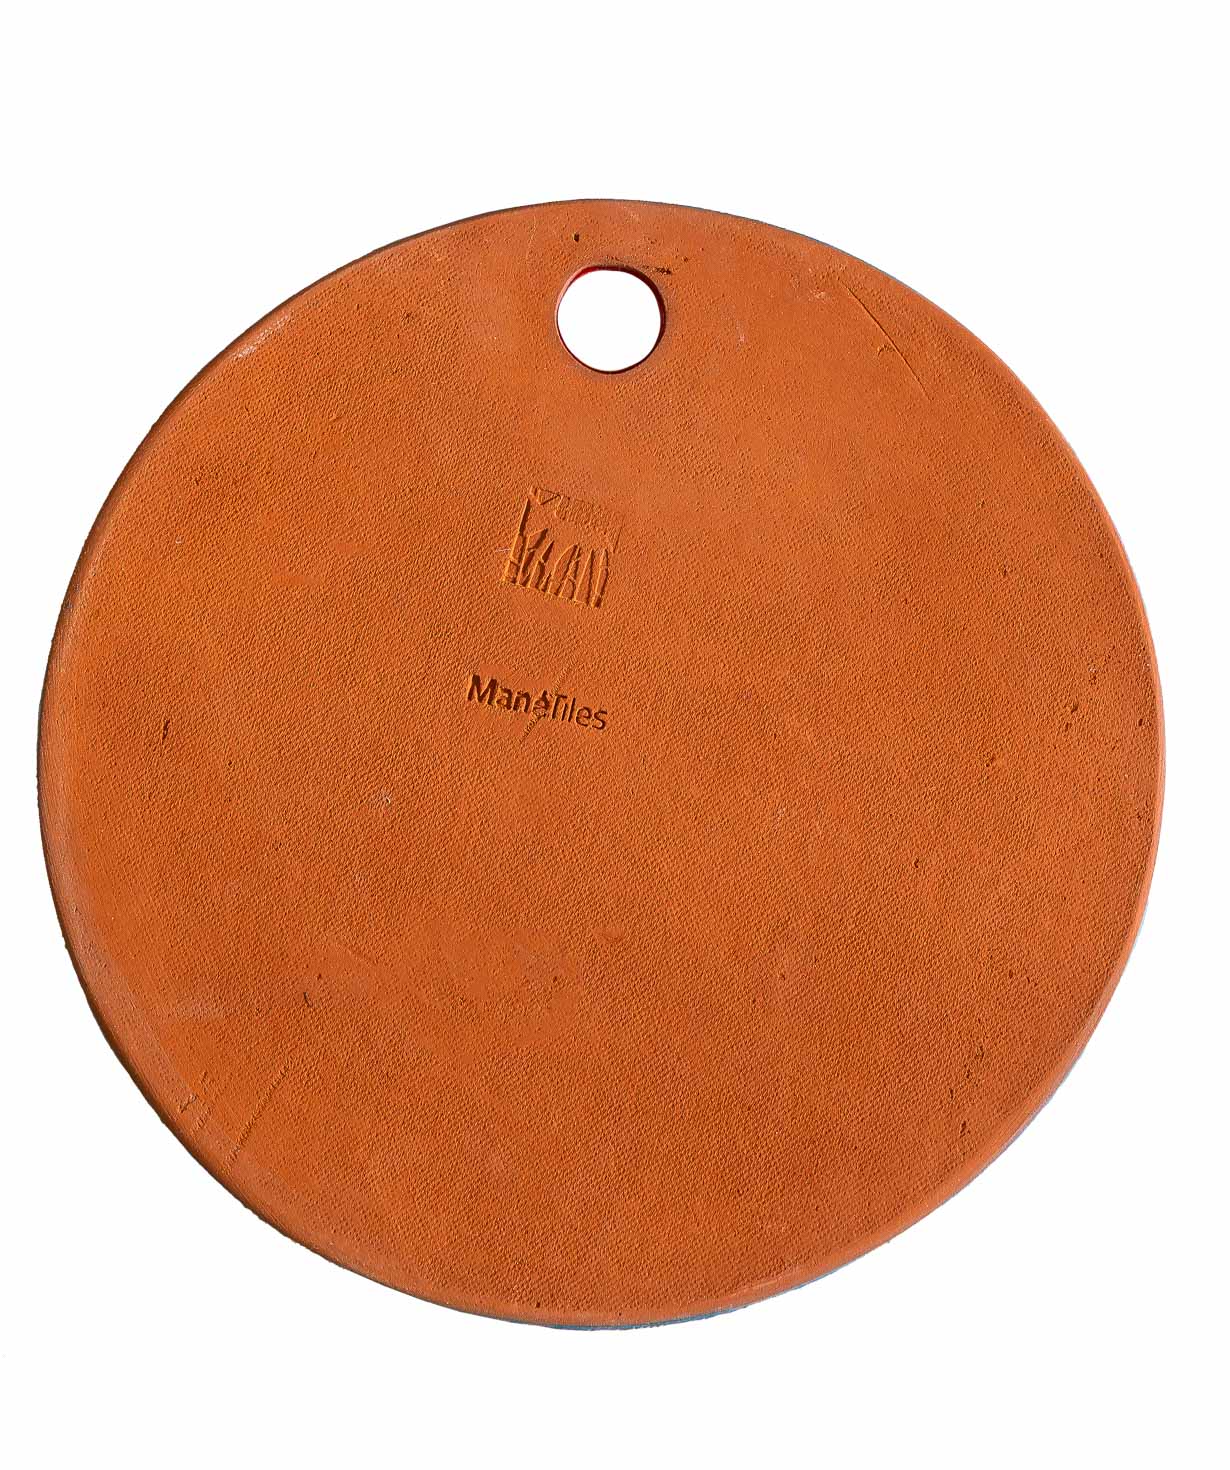 Cheese plate `ManeTiles` decorative, ceramic №9